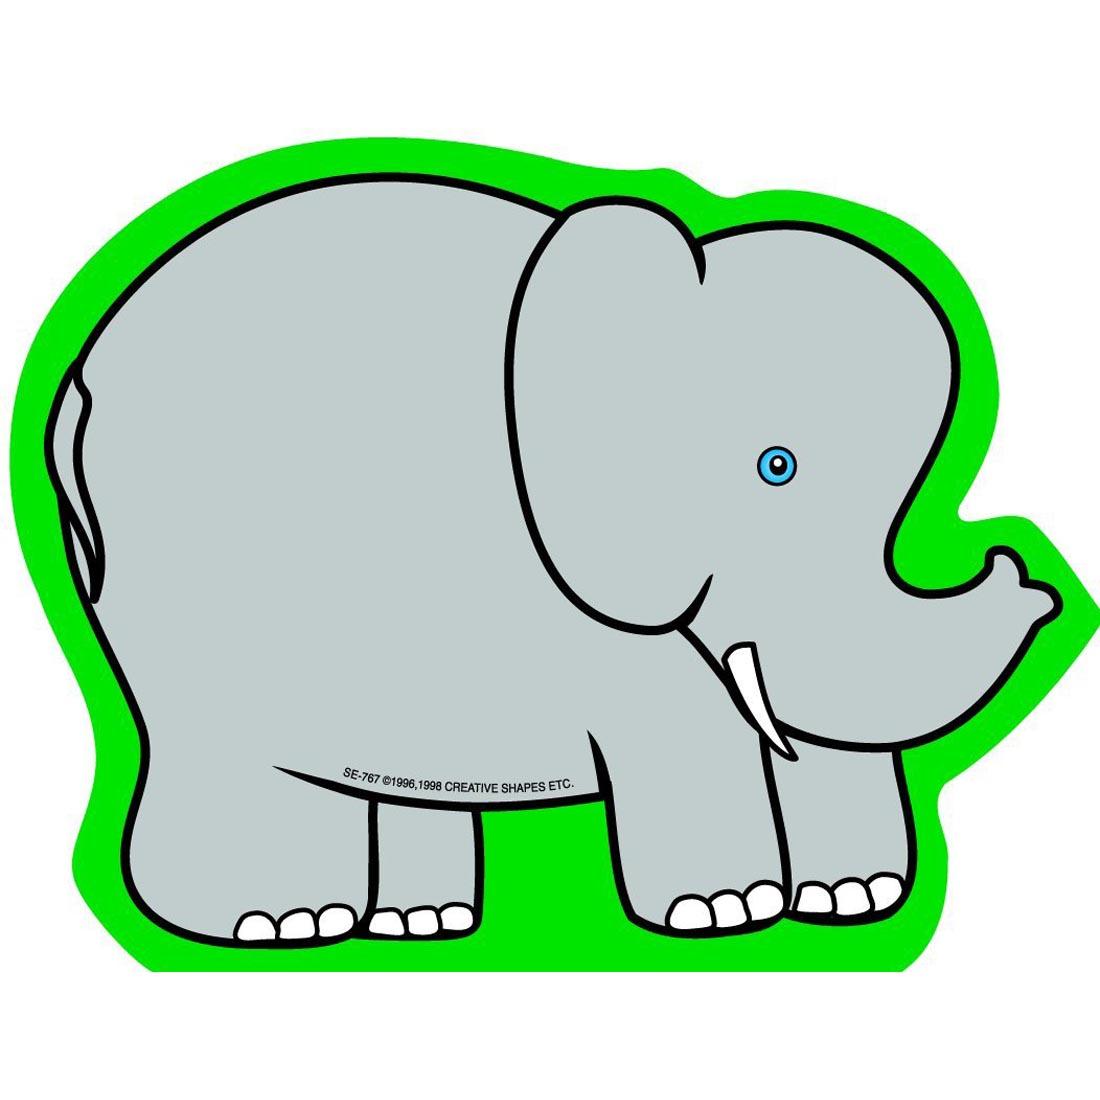 Elephant Notepad by Creative Shapes